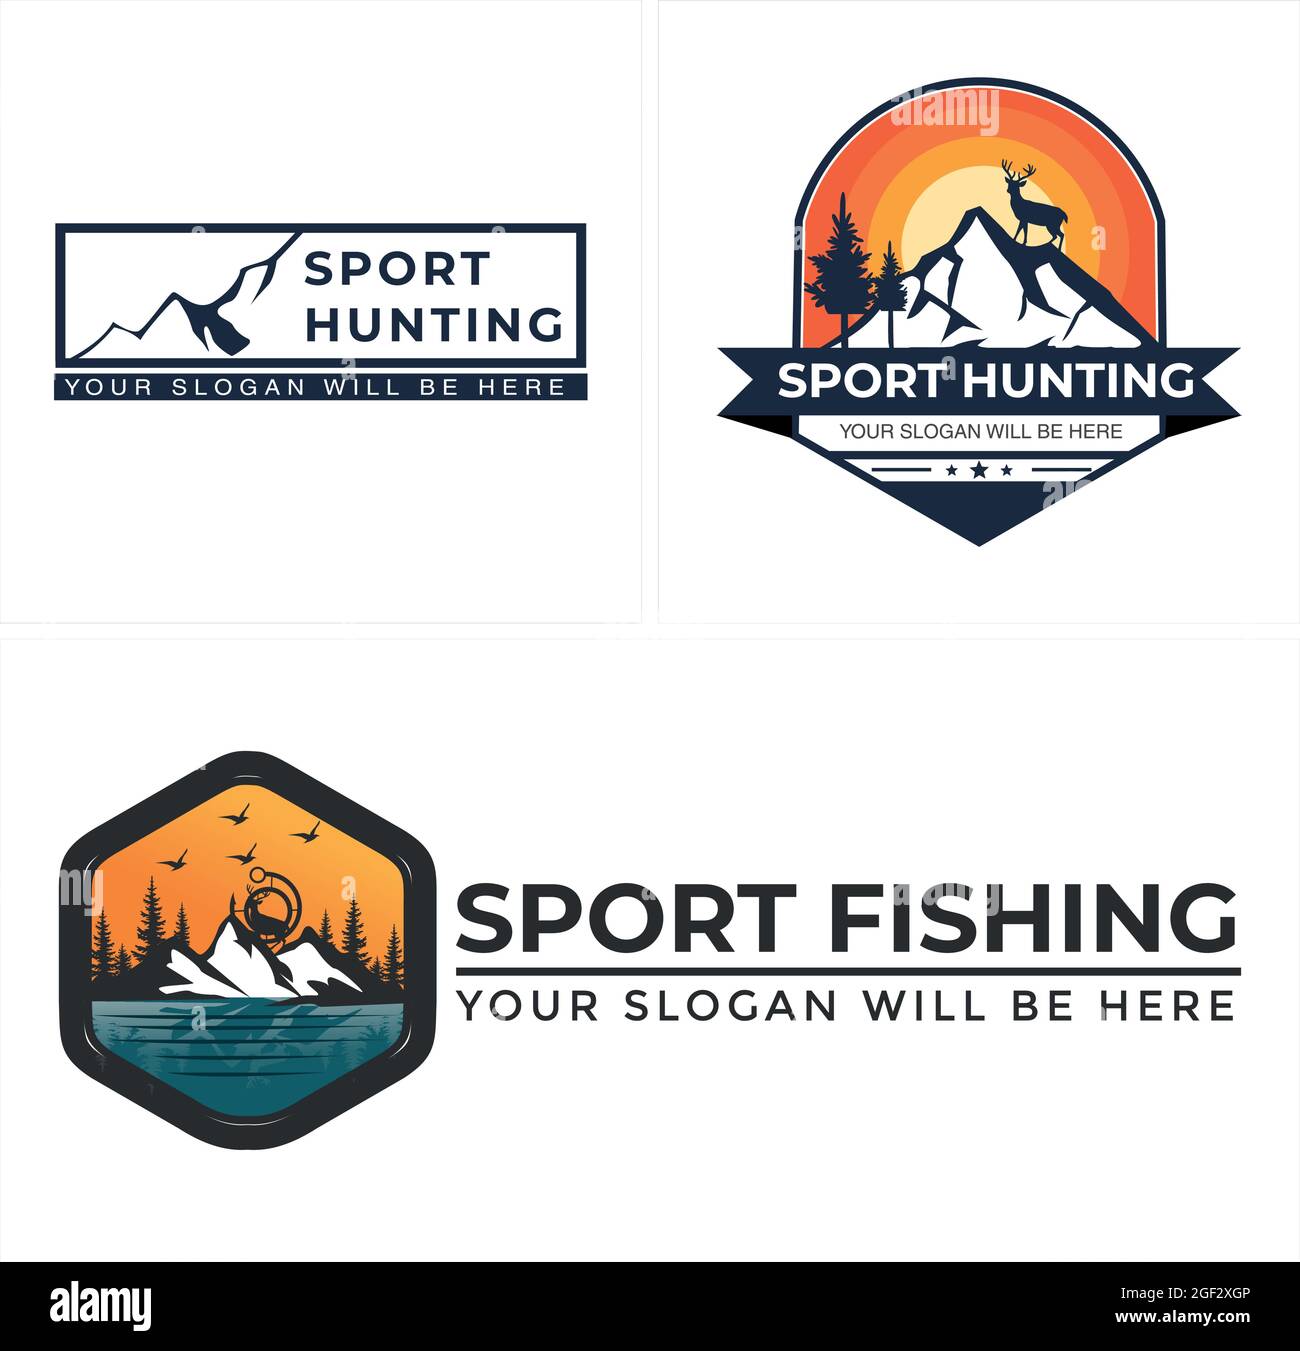 Sport fishing boat hunting travel hiking explore logo design Stock